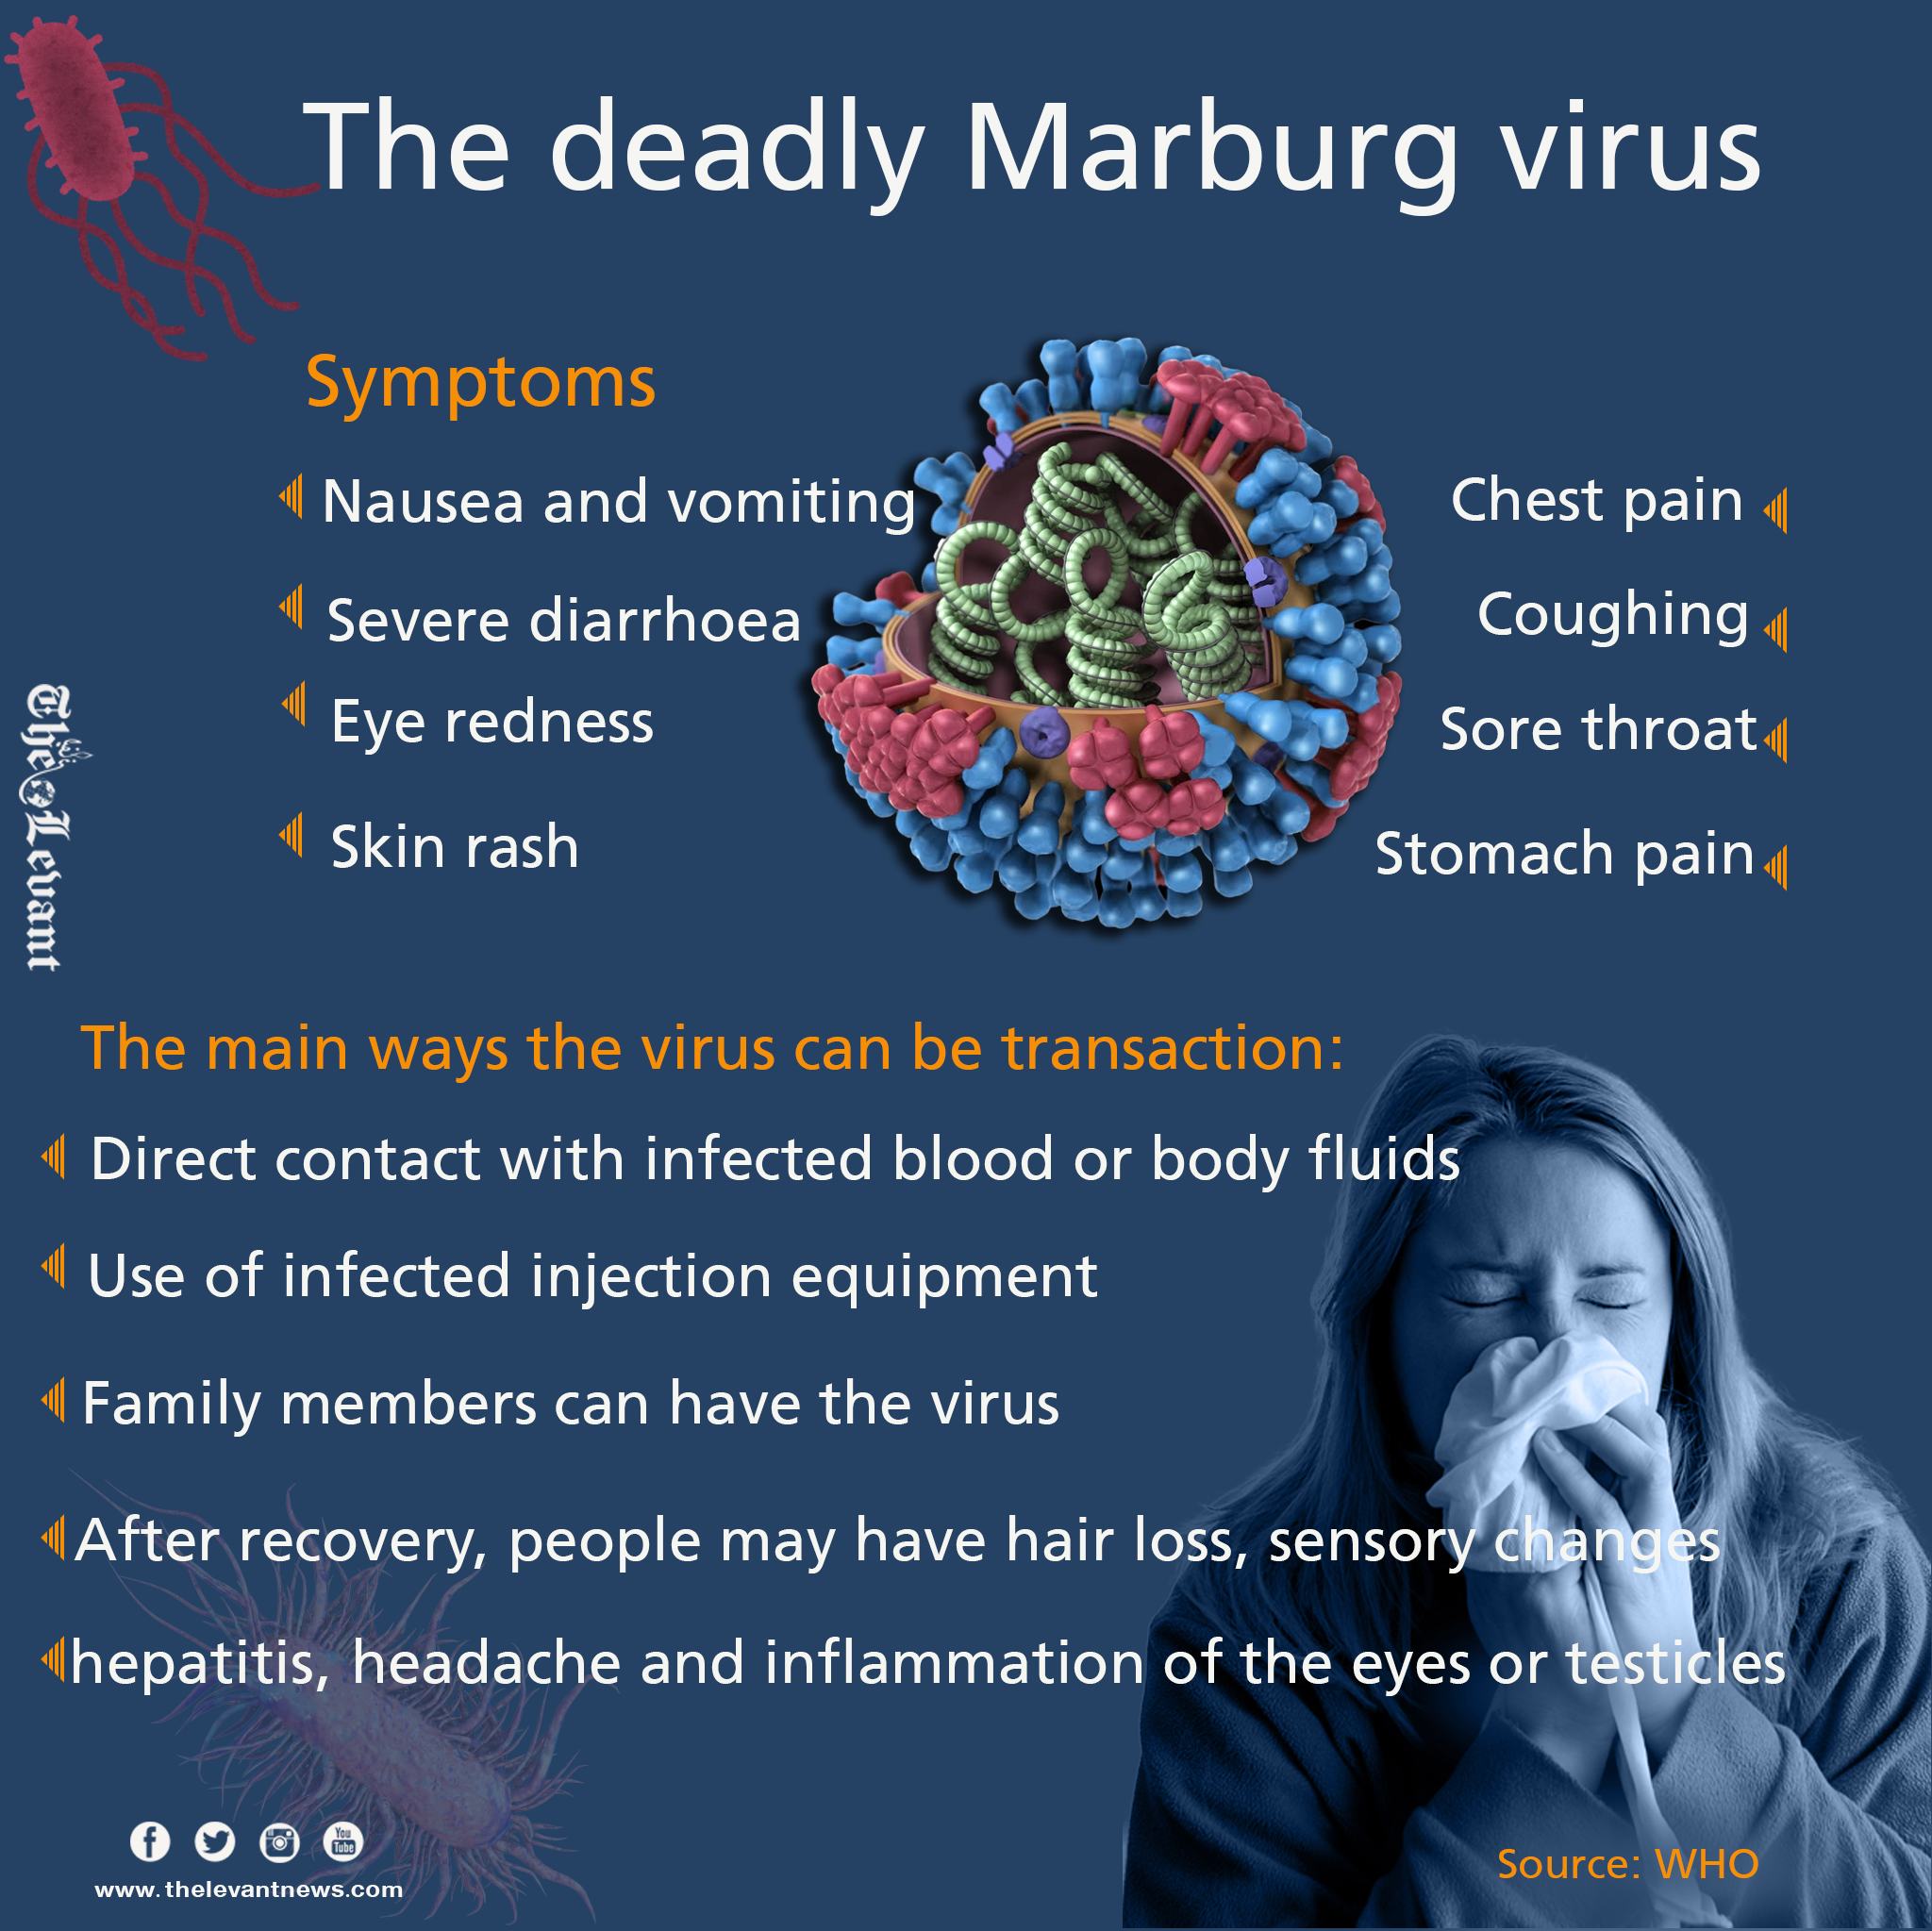 The deadly Marburg virus